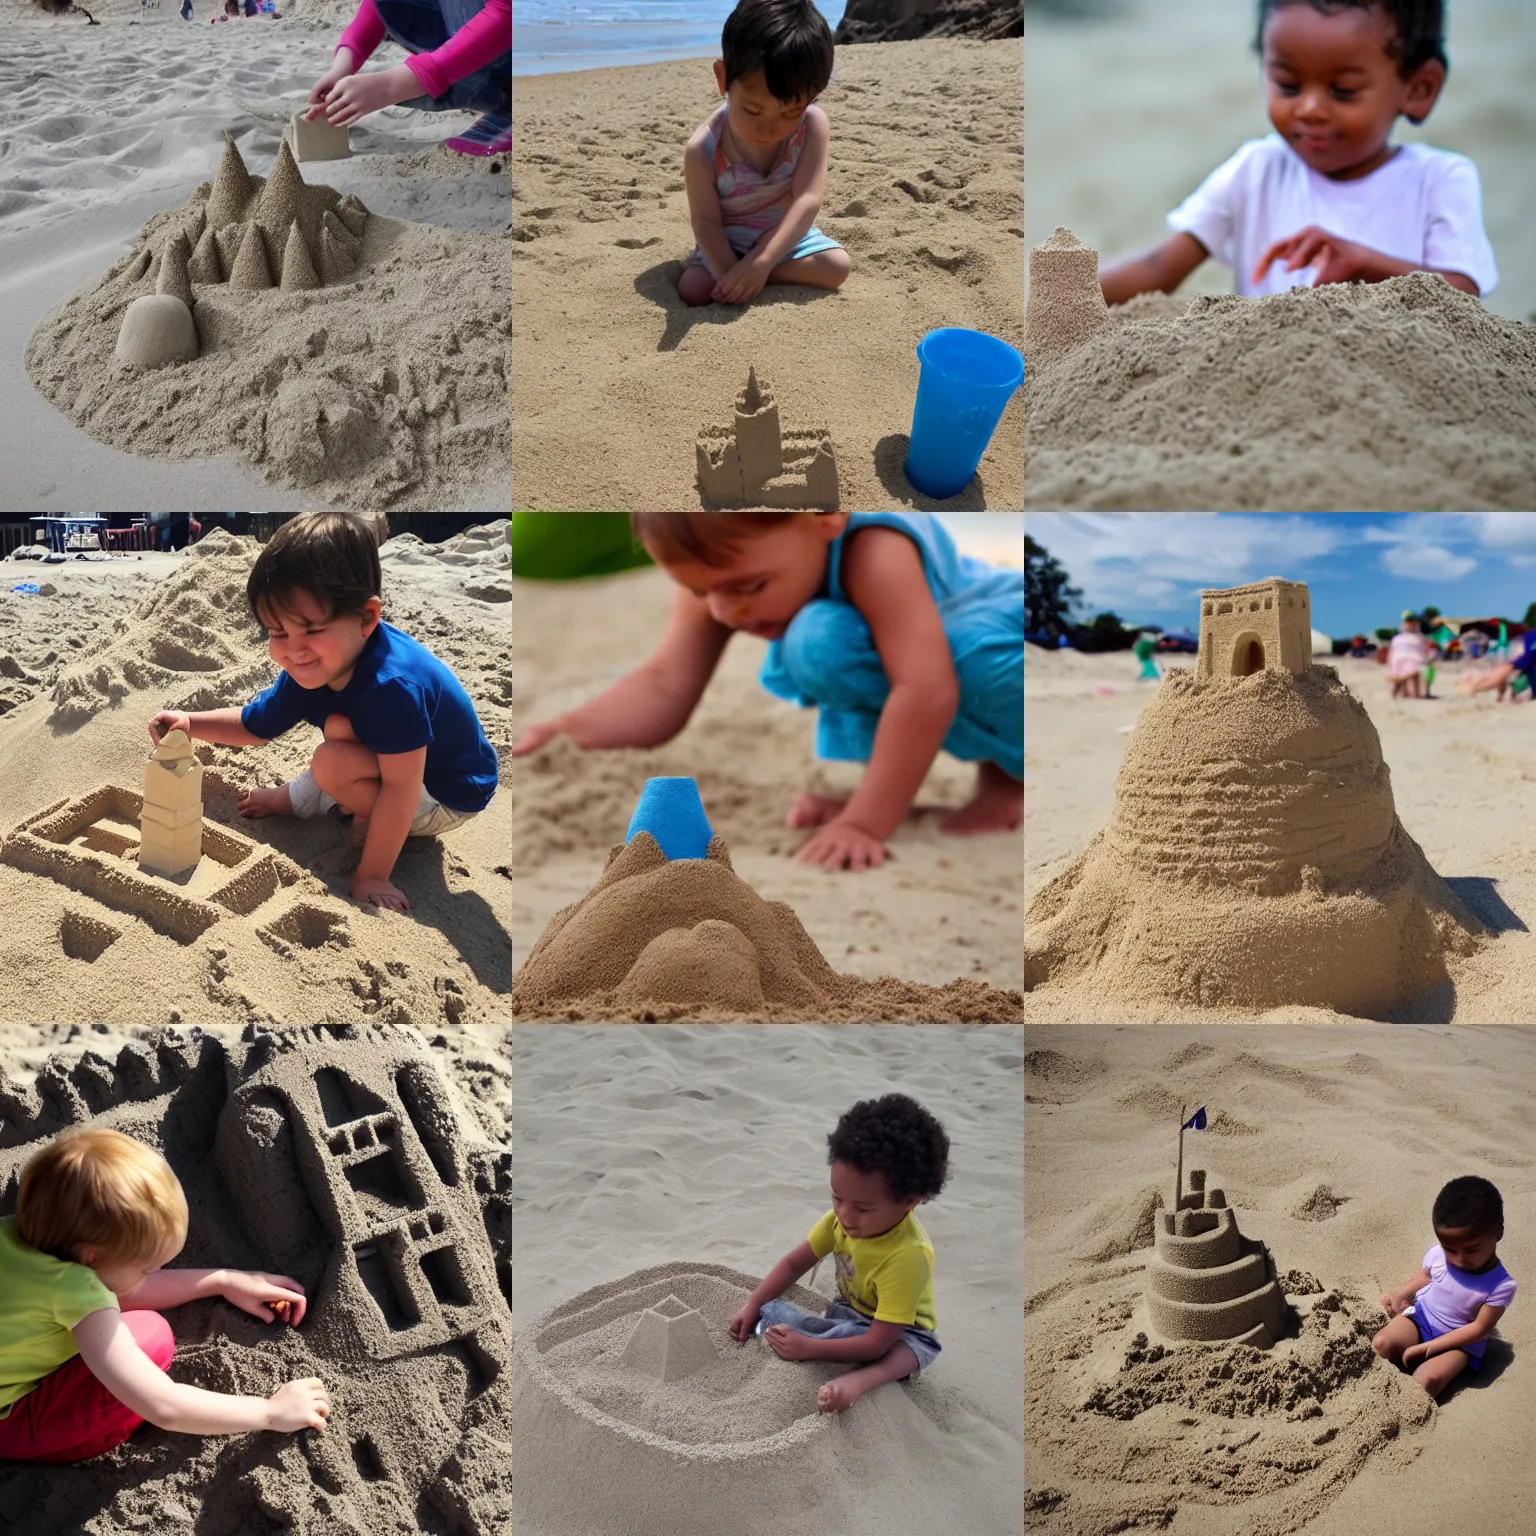 Prompt: A tiny person building a sand castle